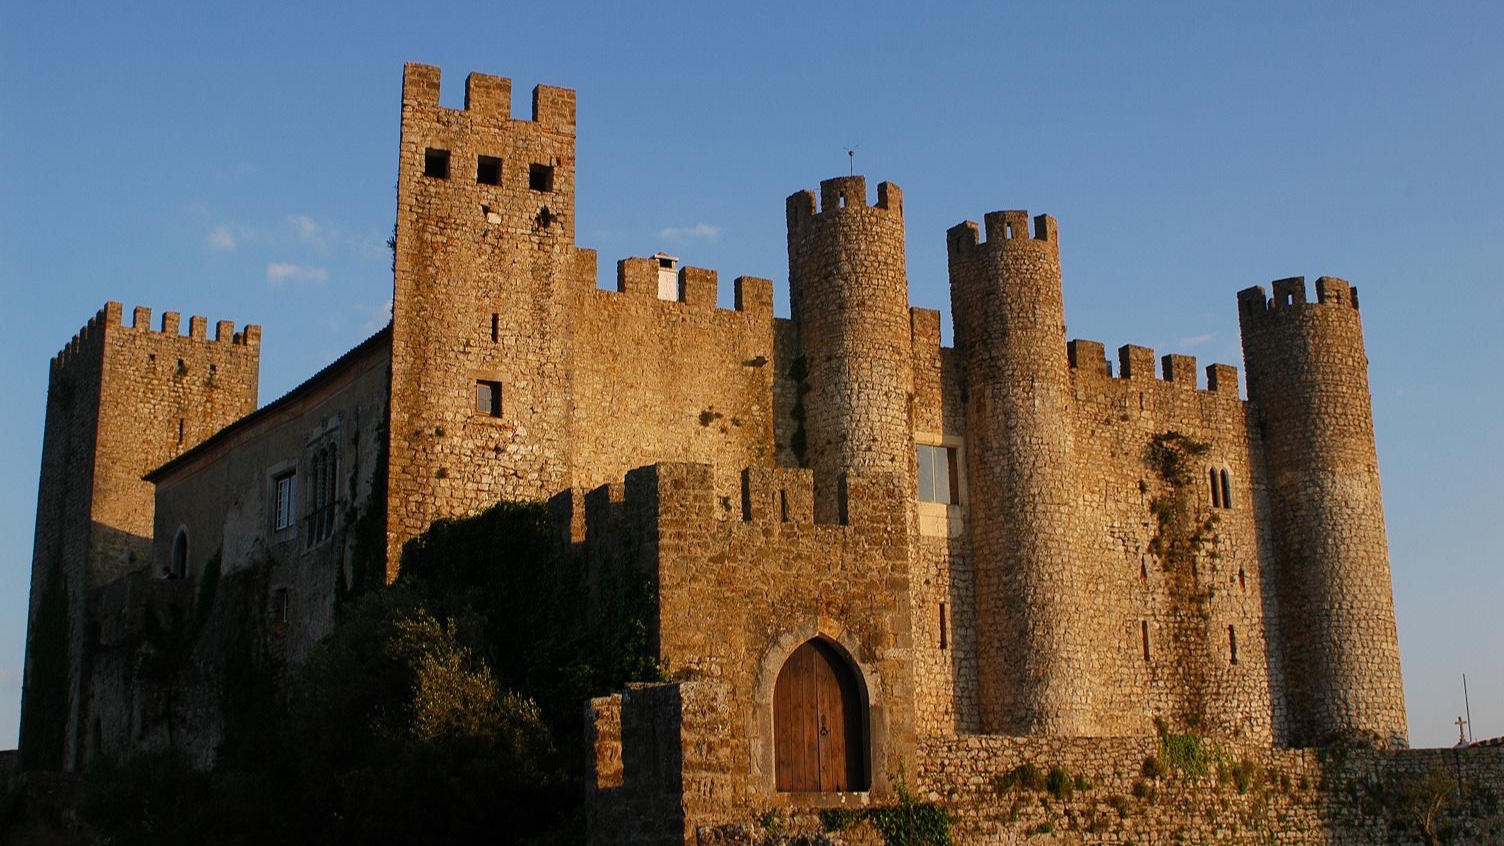 Turismo Centro de Portugal - Alcobaca Batalha Monasteries with Obidos castle back